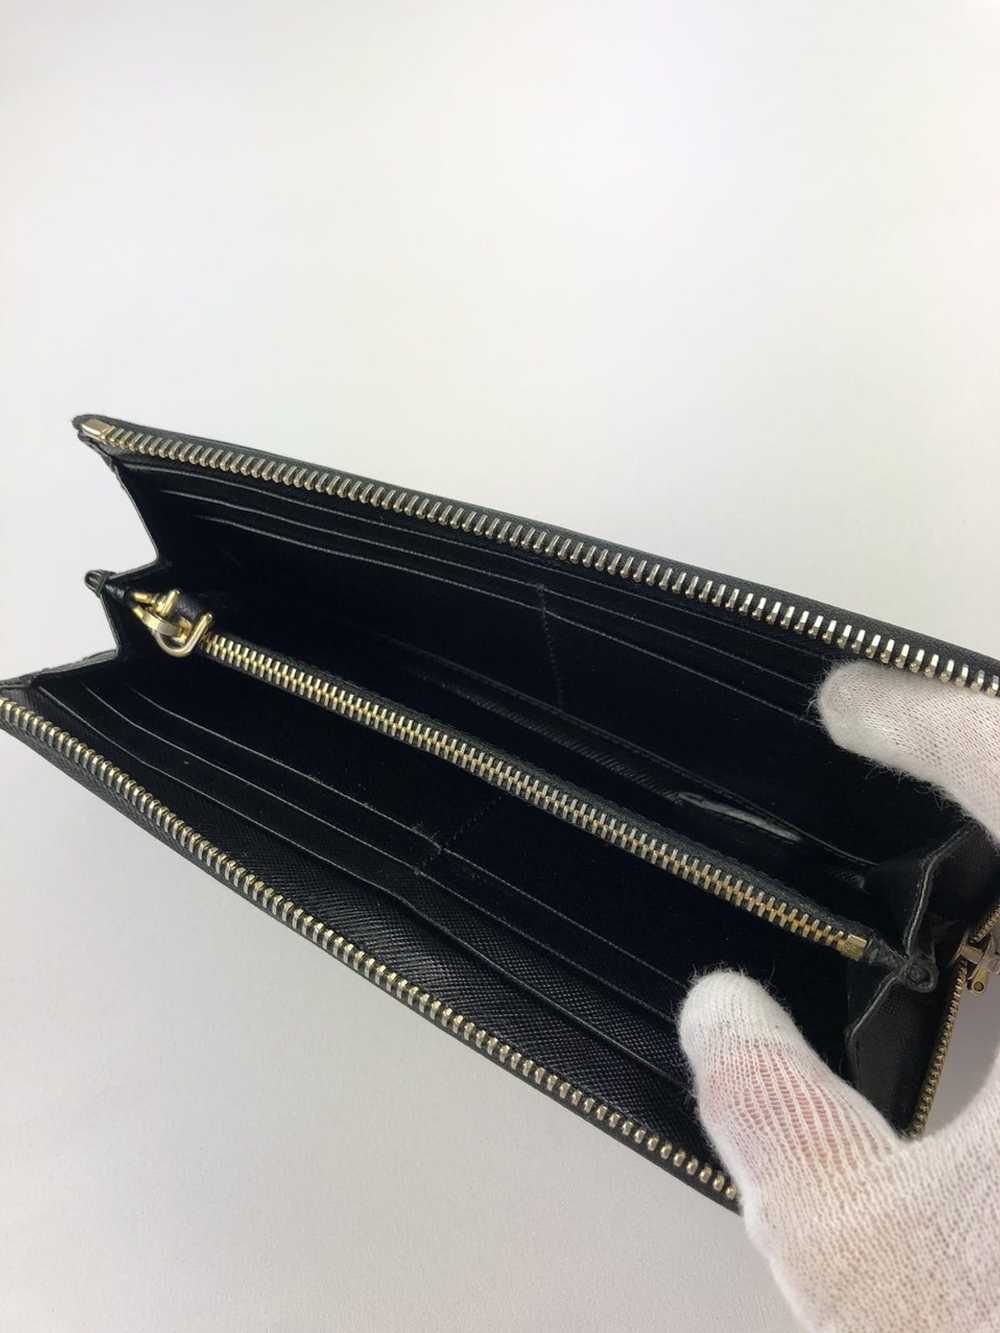 Prada Prada saffiano corner leather wallet - image 2